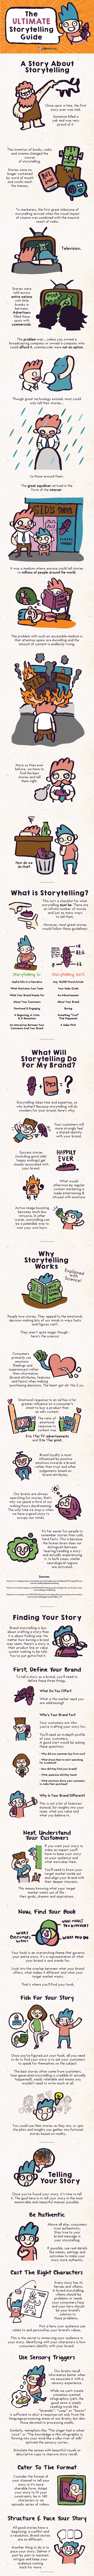 storytelling-graphic-1